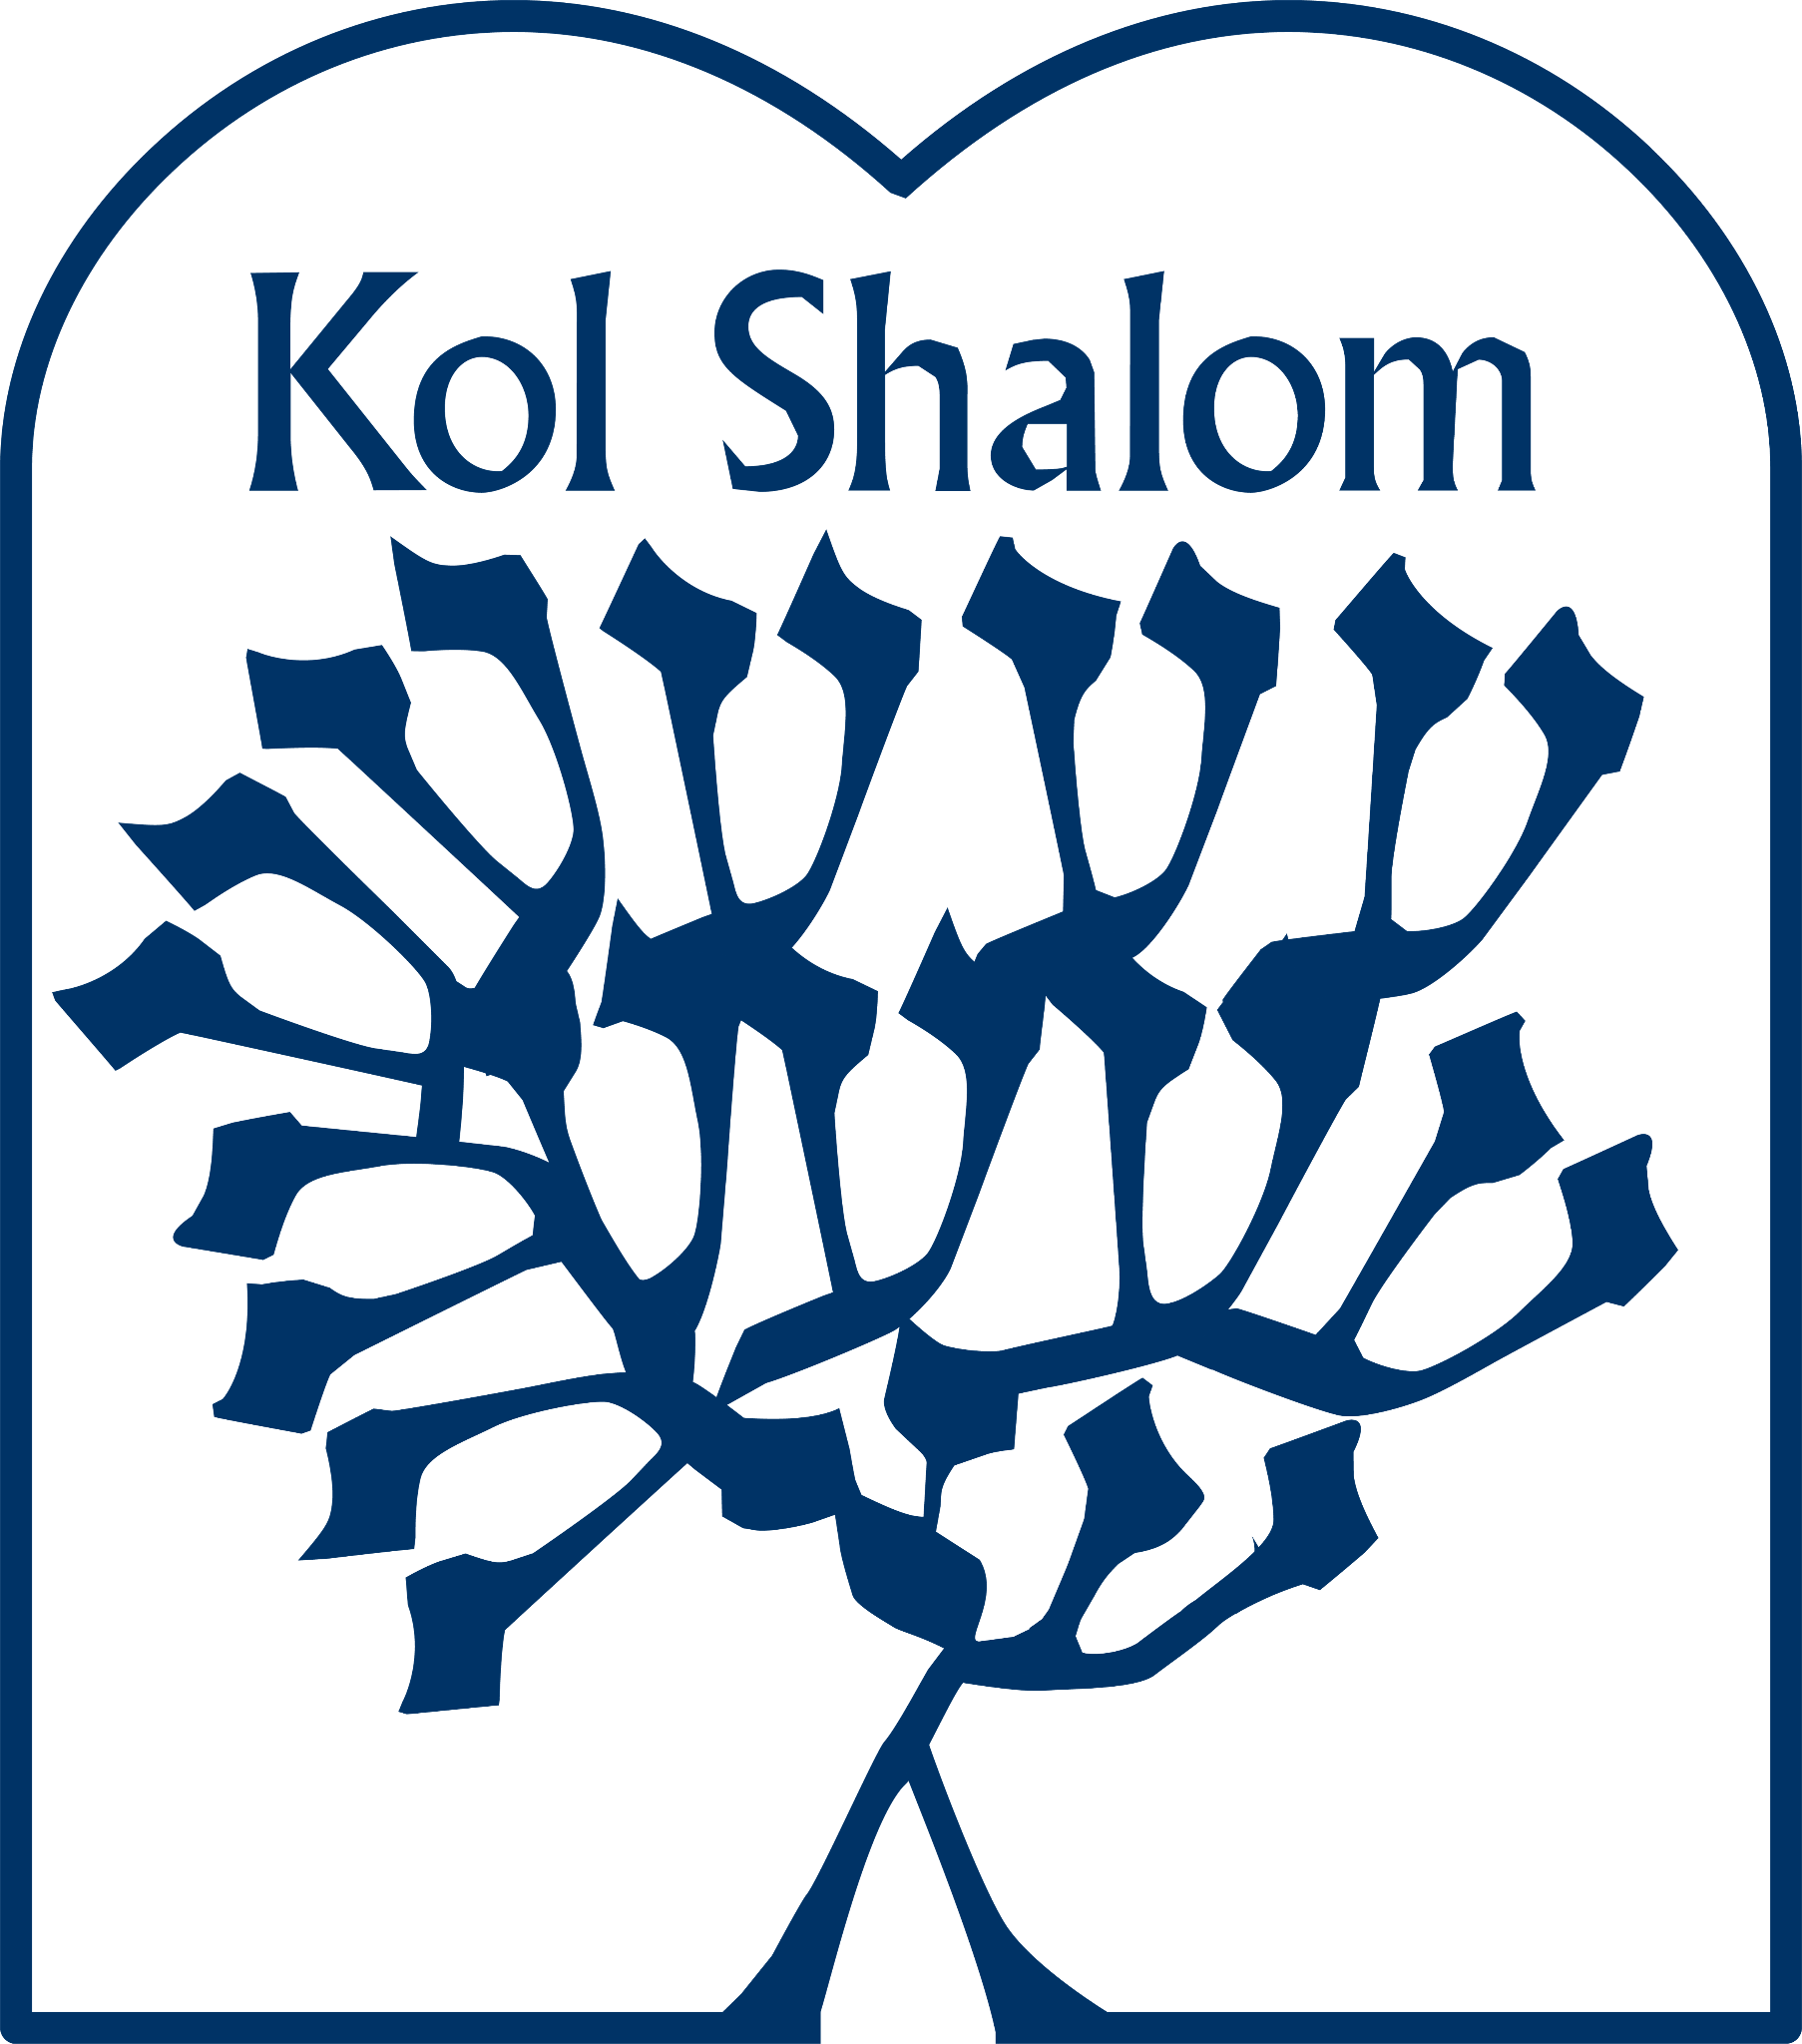 Congregation Kol Shalom of Annapolis